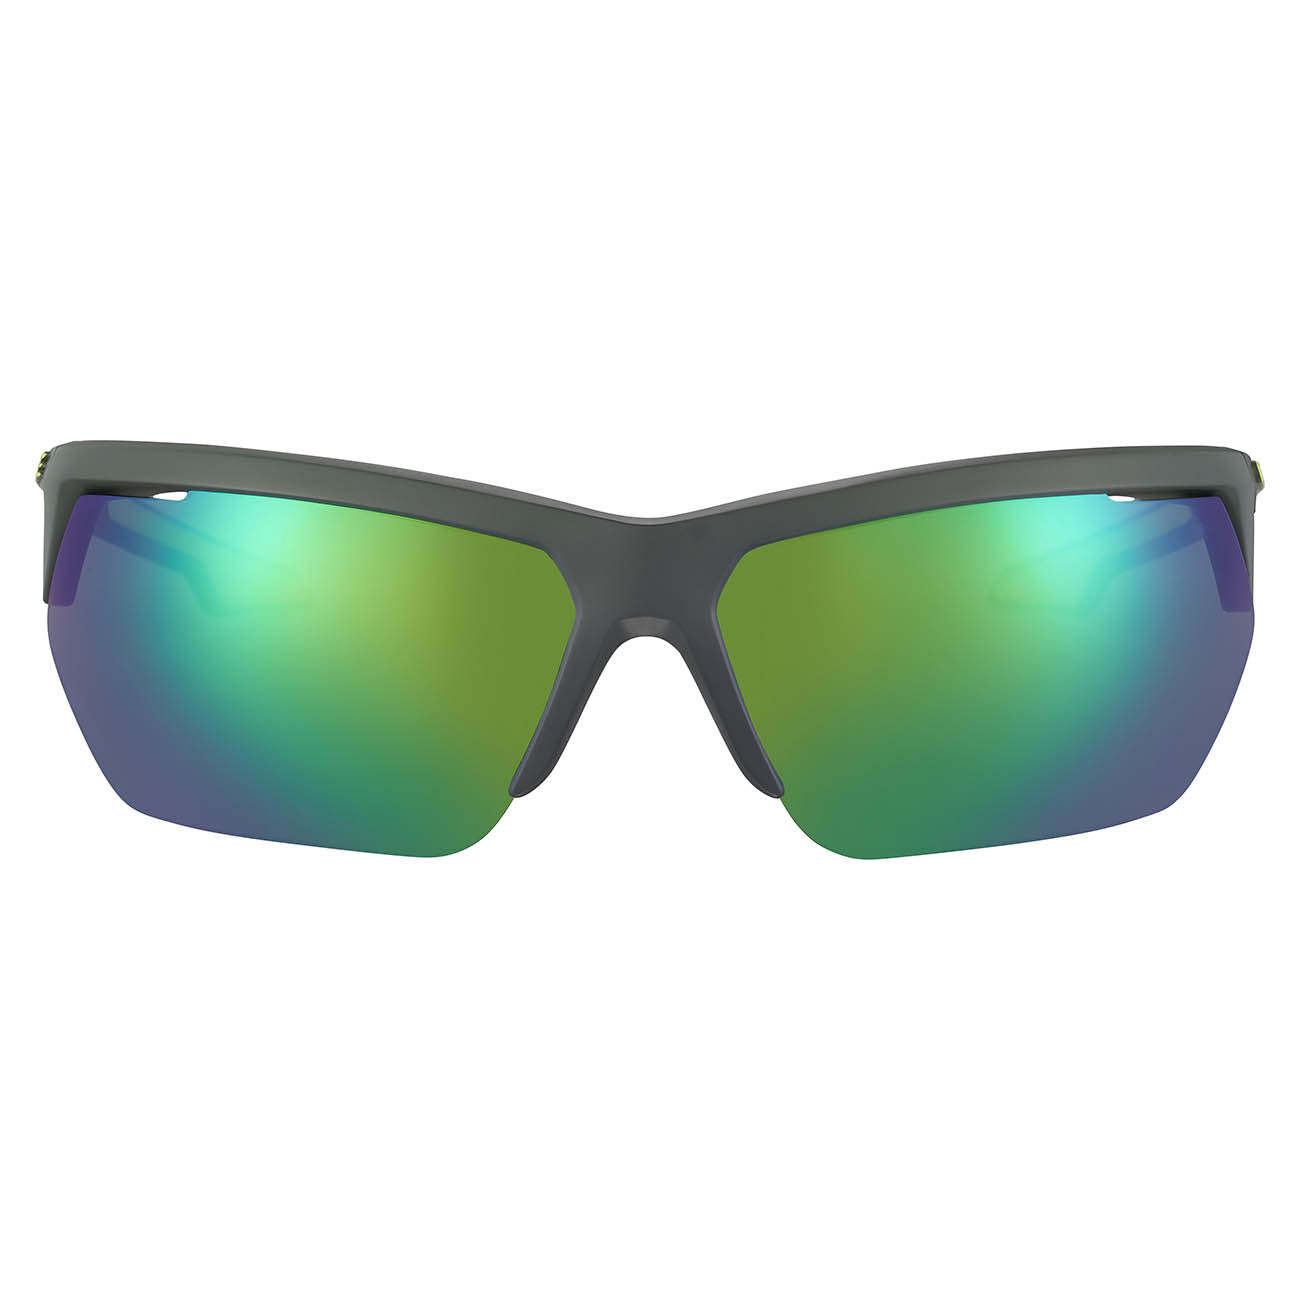 Cebe CINETIK 2.0 CBS091 Sunglasses - Graphite Lime Matte - Zone Grey Cat.3 Green